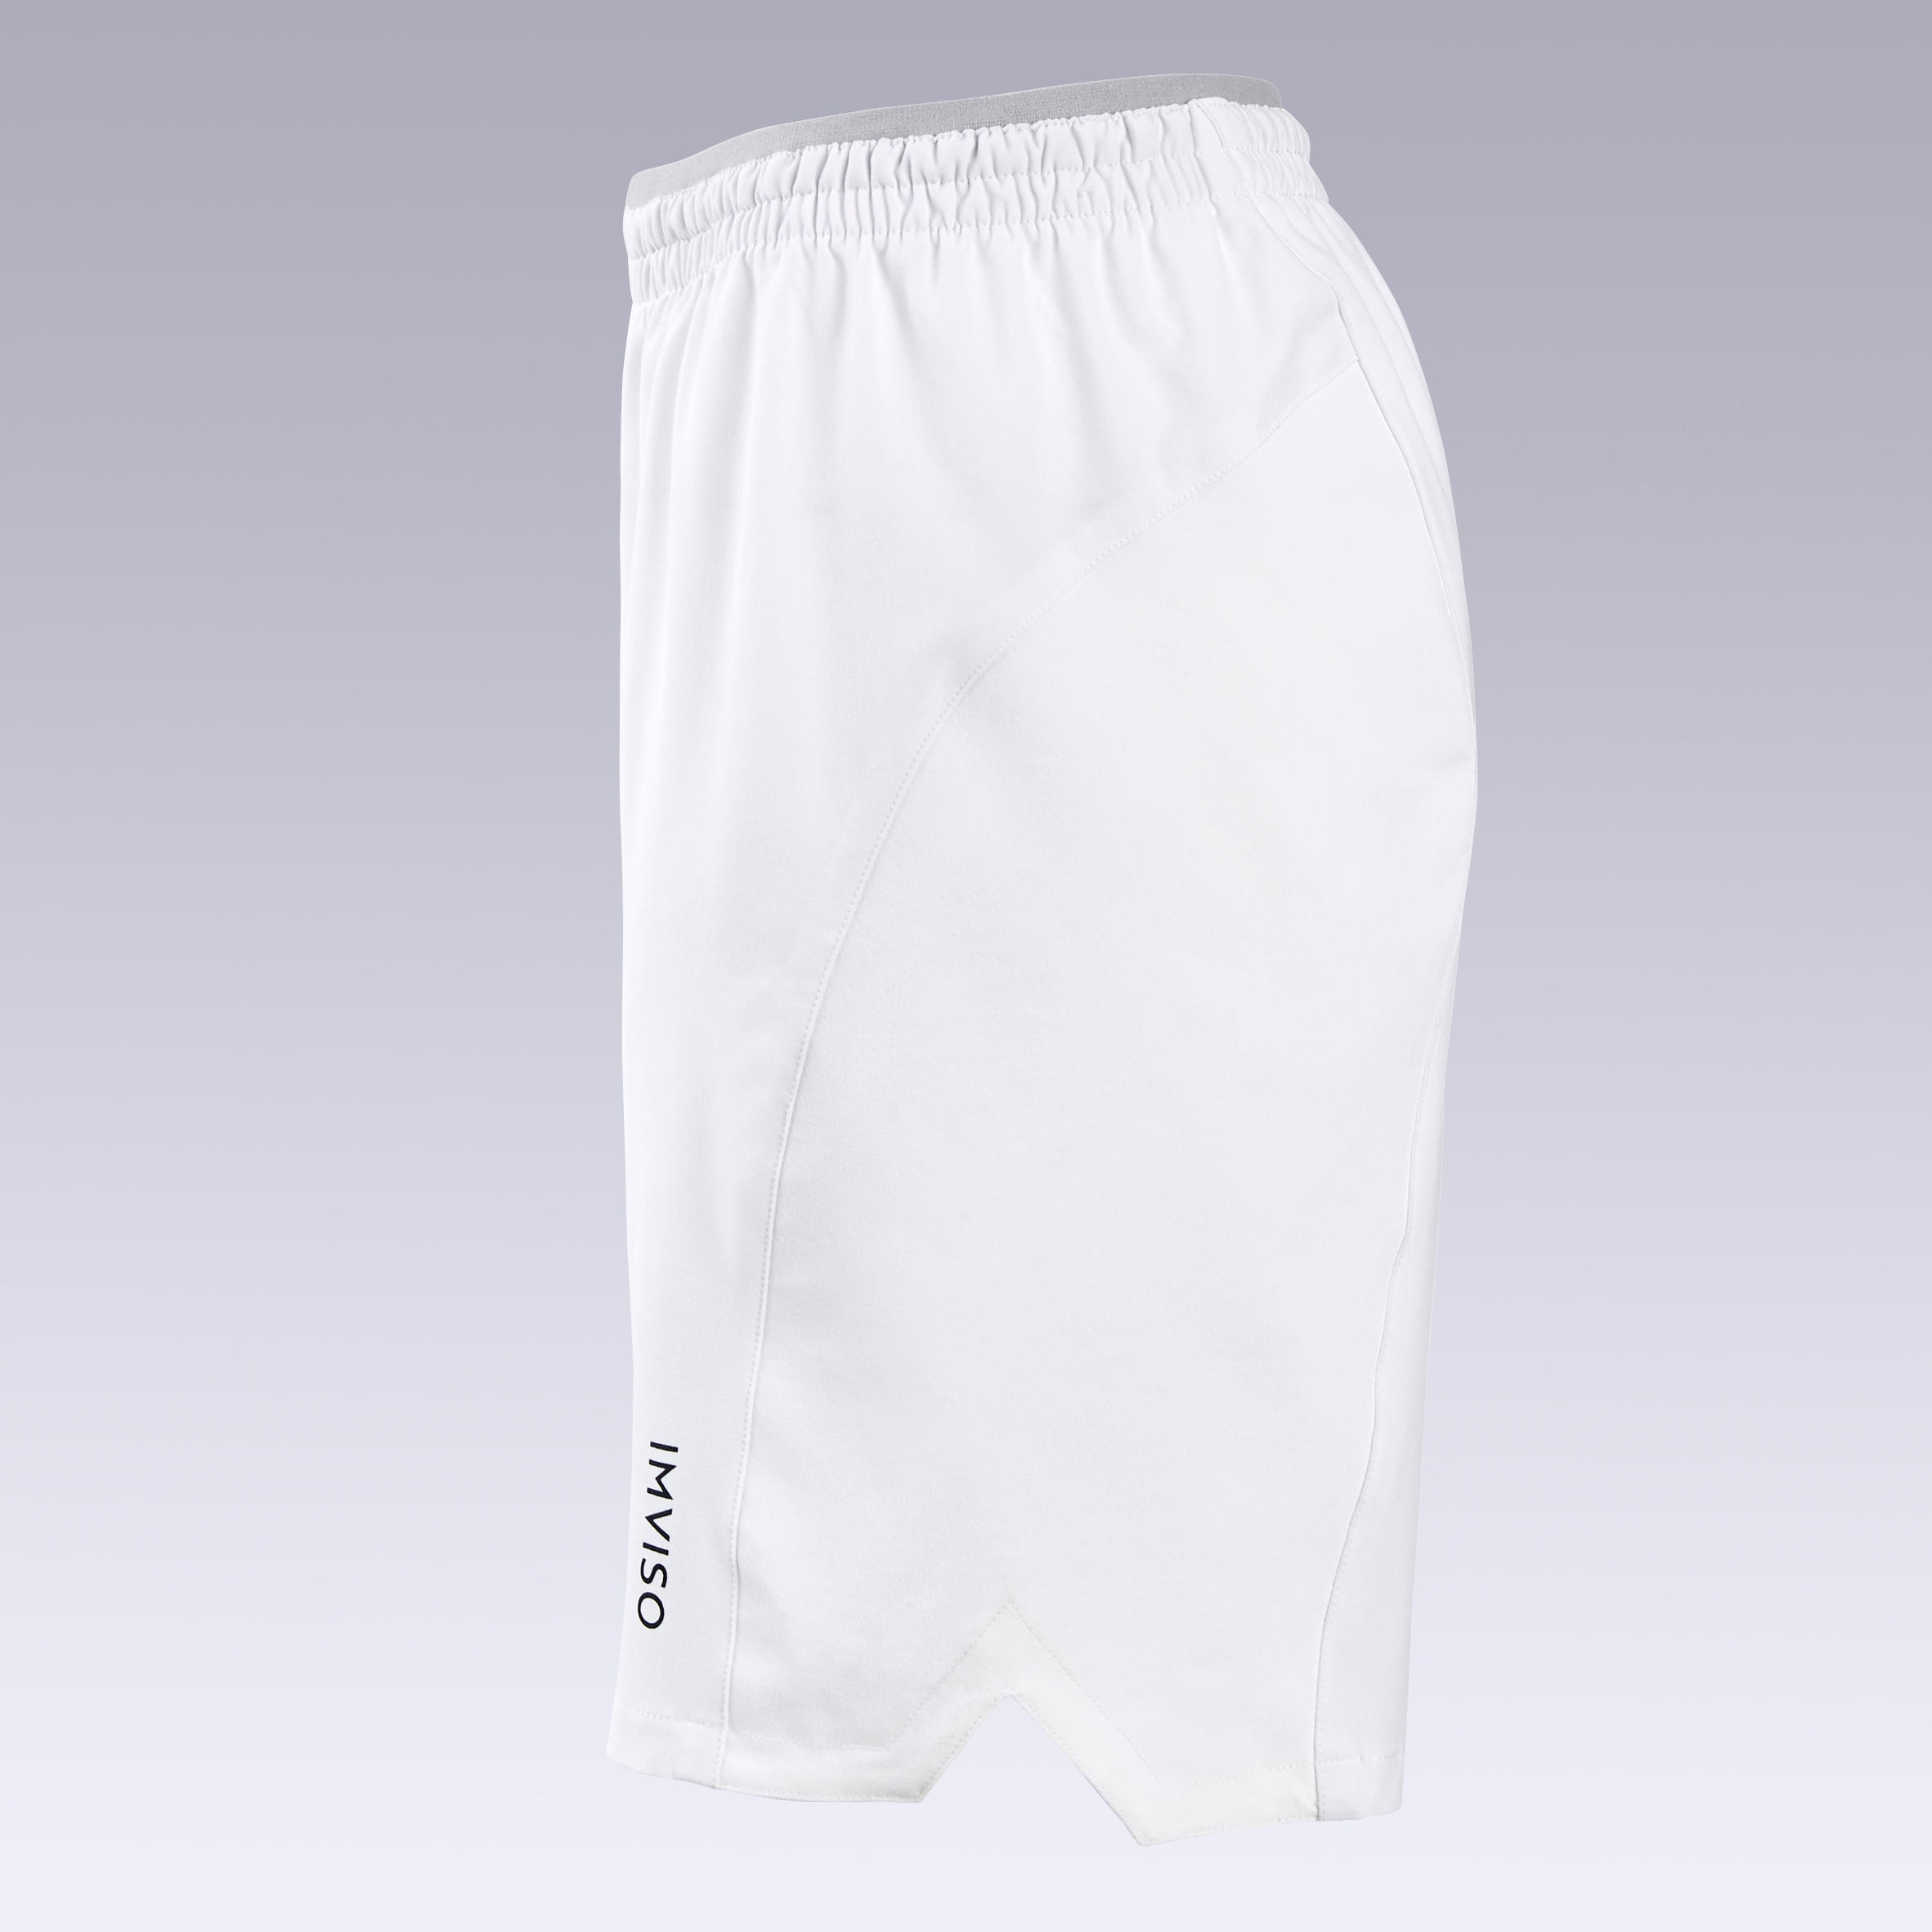 Women's Futsal Shorts - White 4/7